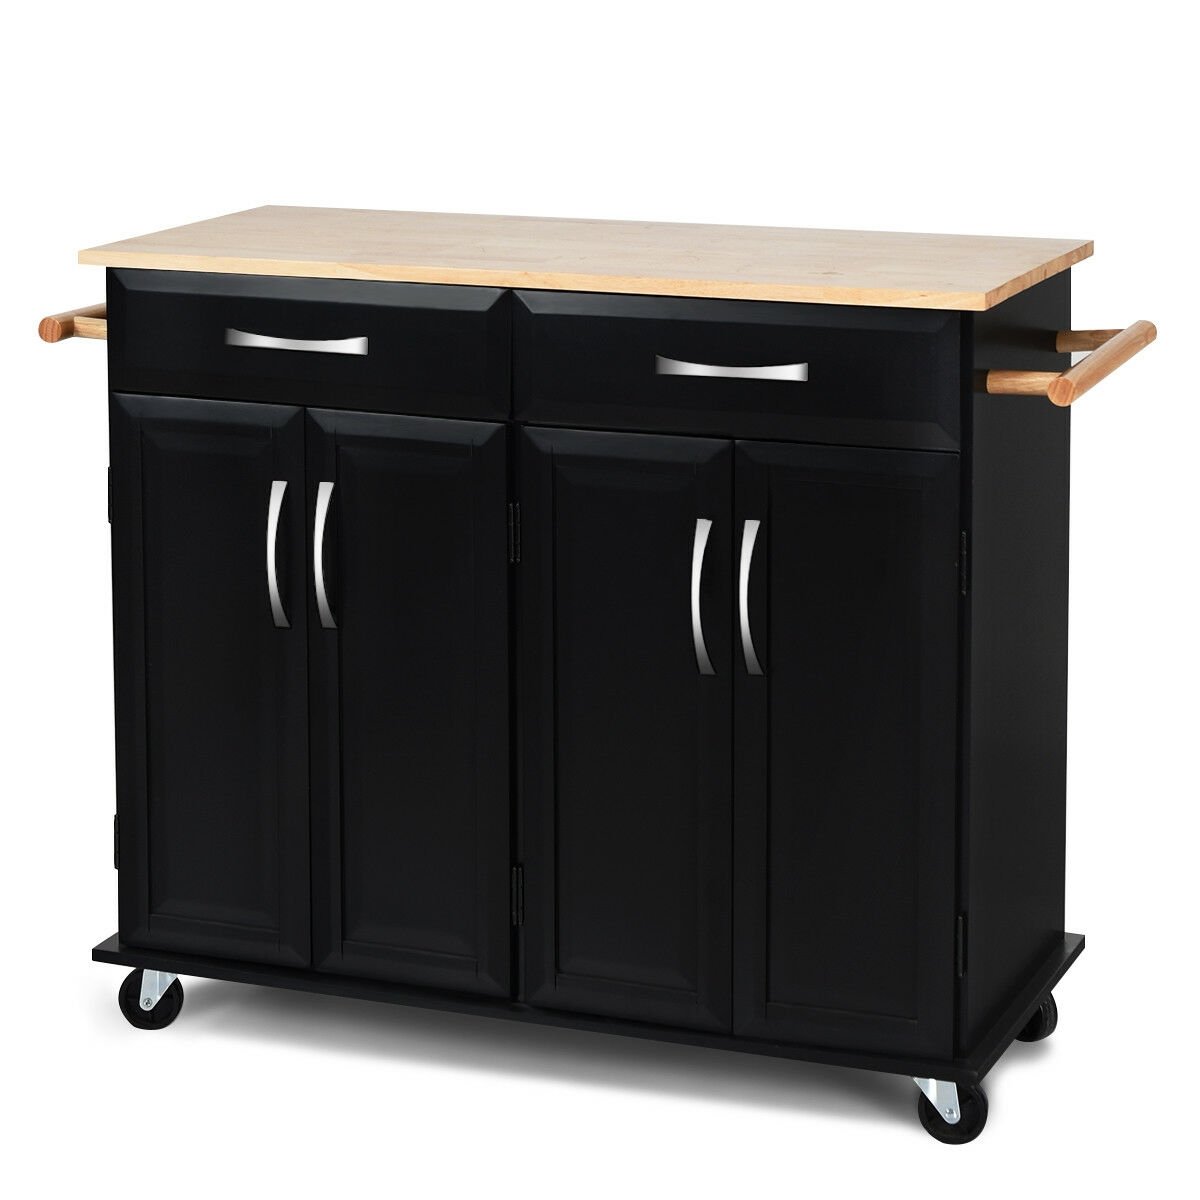 Wood Top Rolling Kitchen Trolley Island Cart Storage Cabinet, Black - Gallery Canada